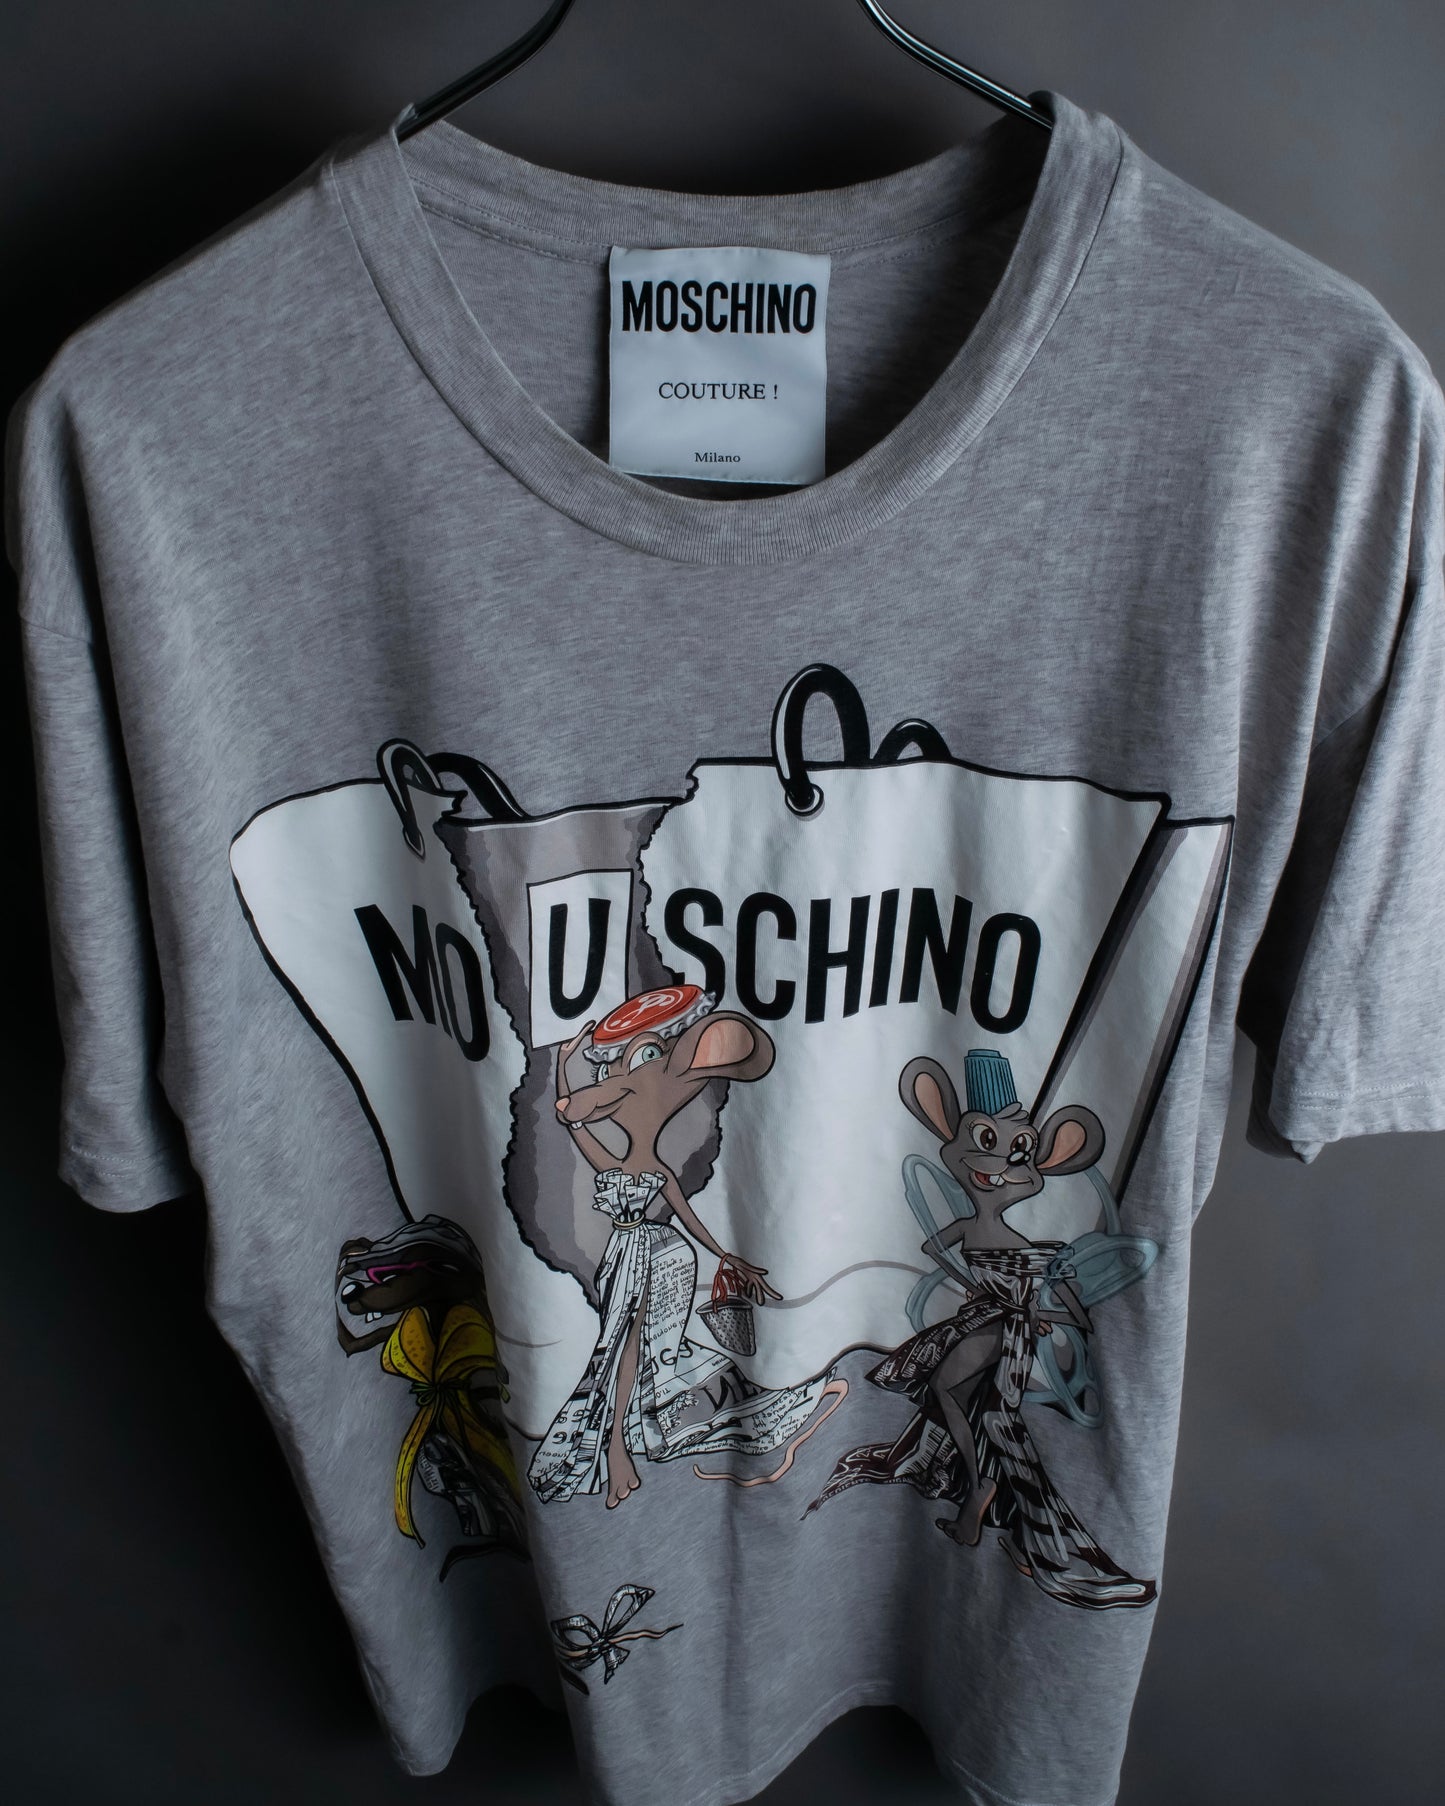 "MOSCHINO COUTURE" Unique mouse dress-up design T-shirt